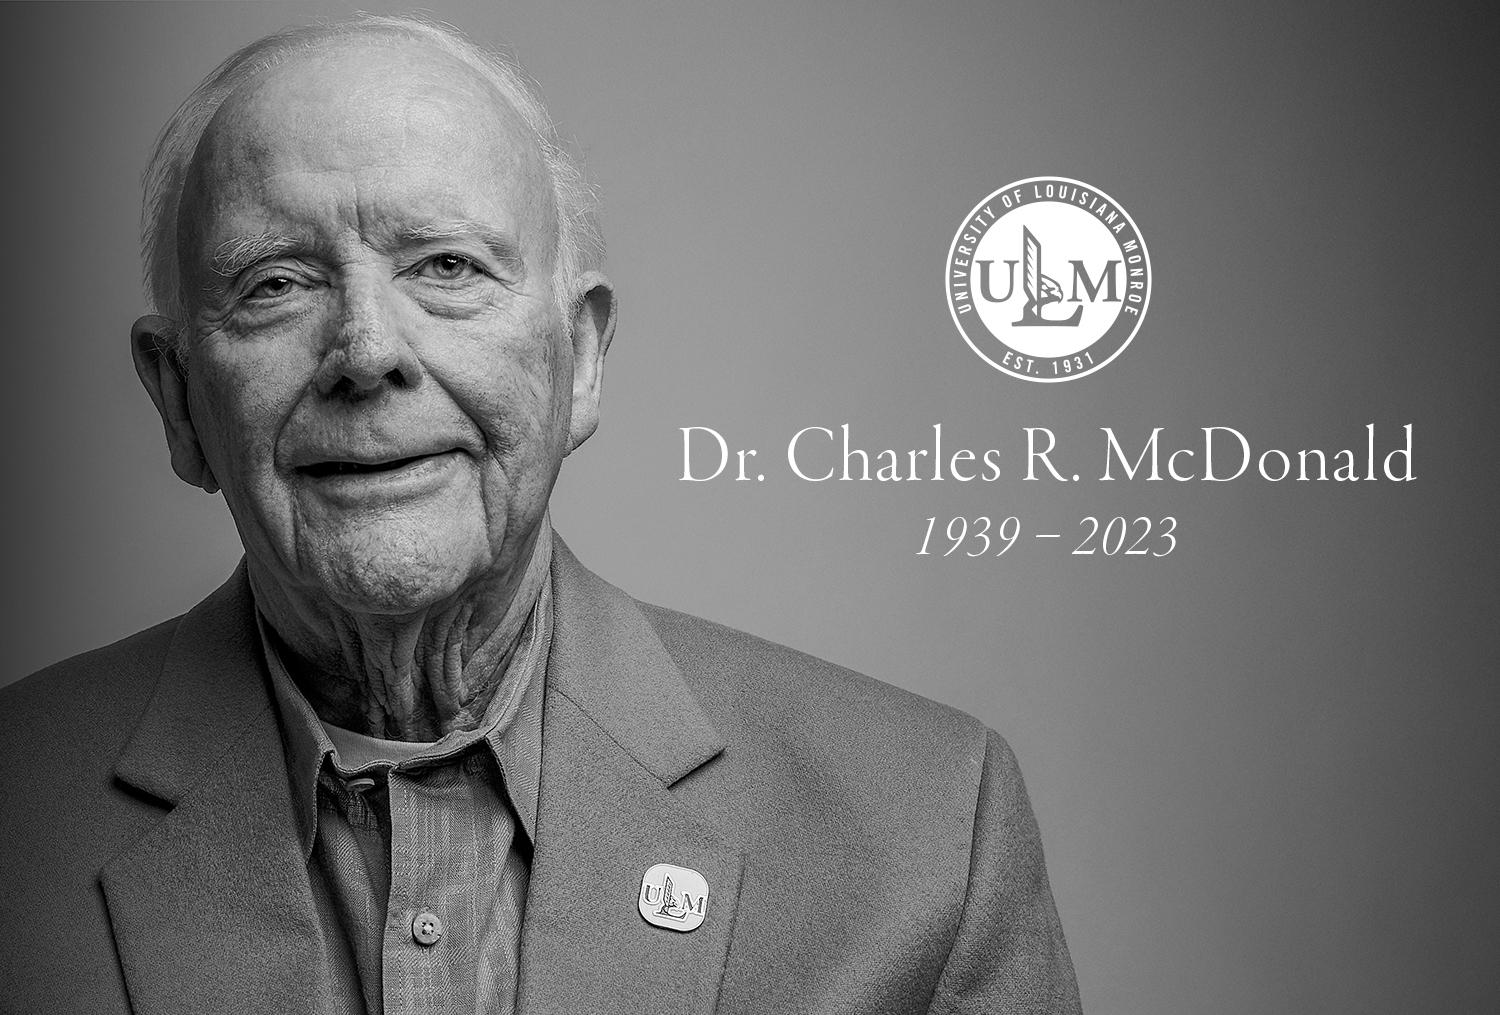 Dr. Charles R. McDonald